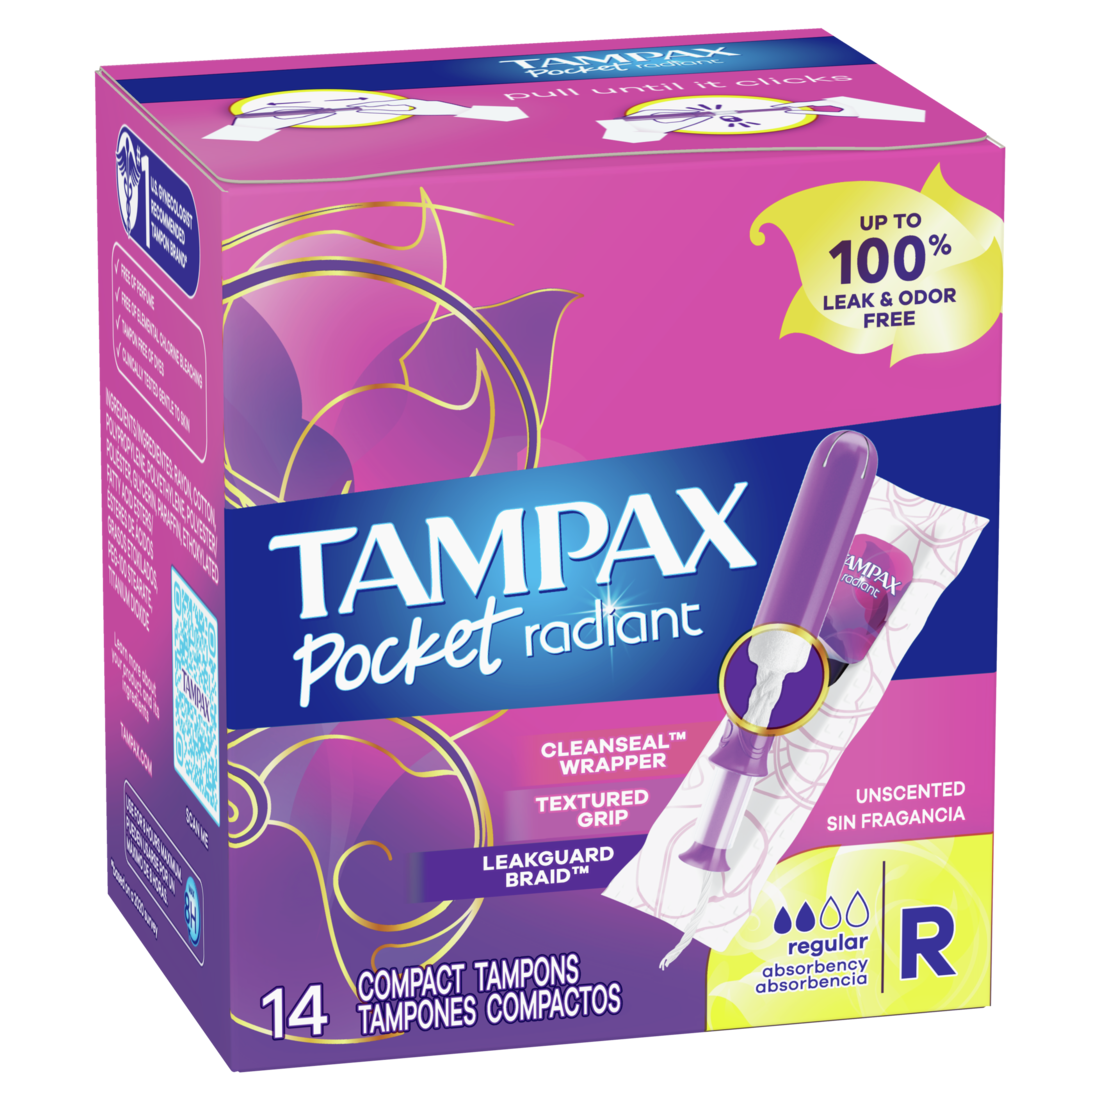 Tampax Pocket Radiant Compact Tampons Regular - 14ct/18pk